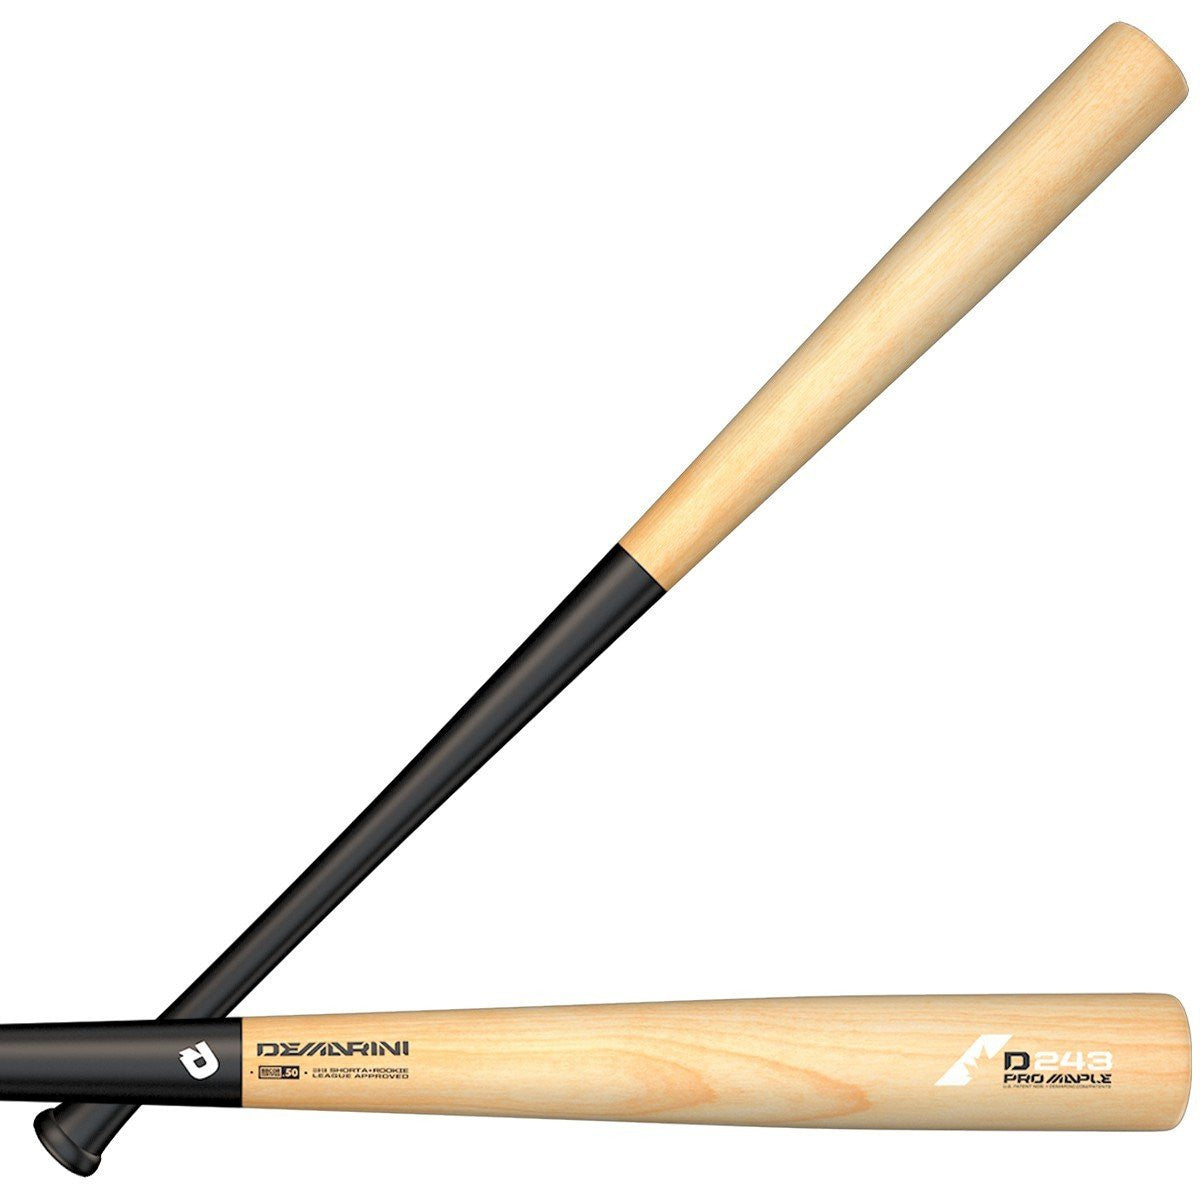 DEMARINI D243 Pro Maple Wood Composite Baseball Bat Bat Club USA